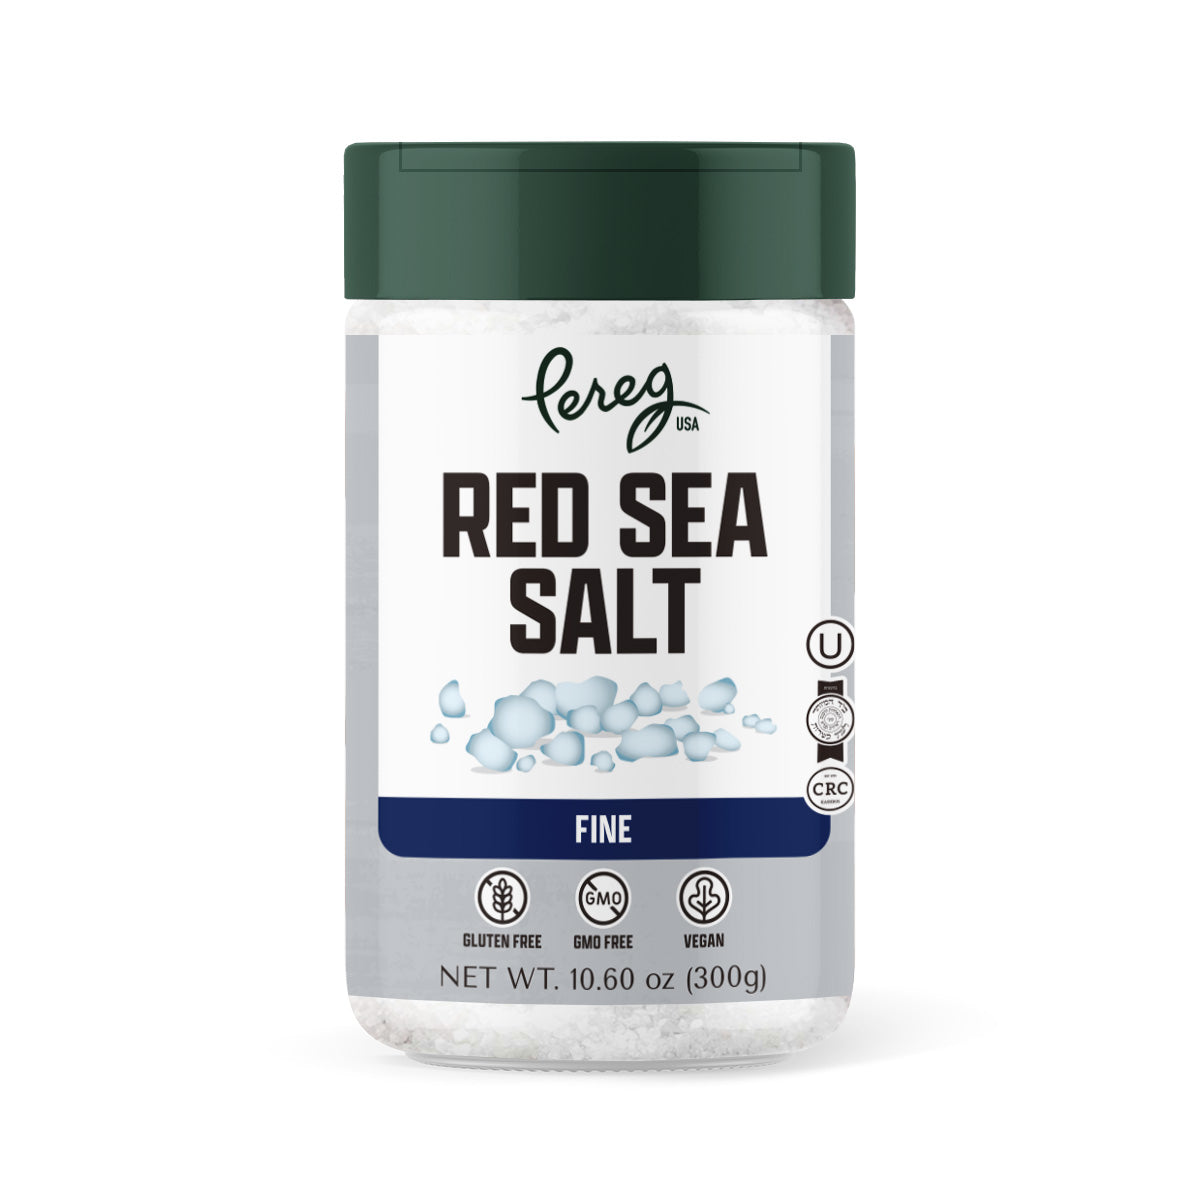 Image of Pereg Fine Red Sea Salt - use code KOSHEREVERYDAY for 15% off